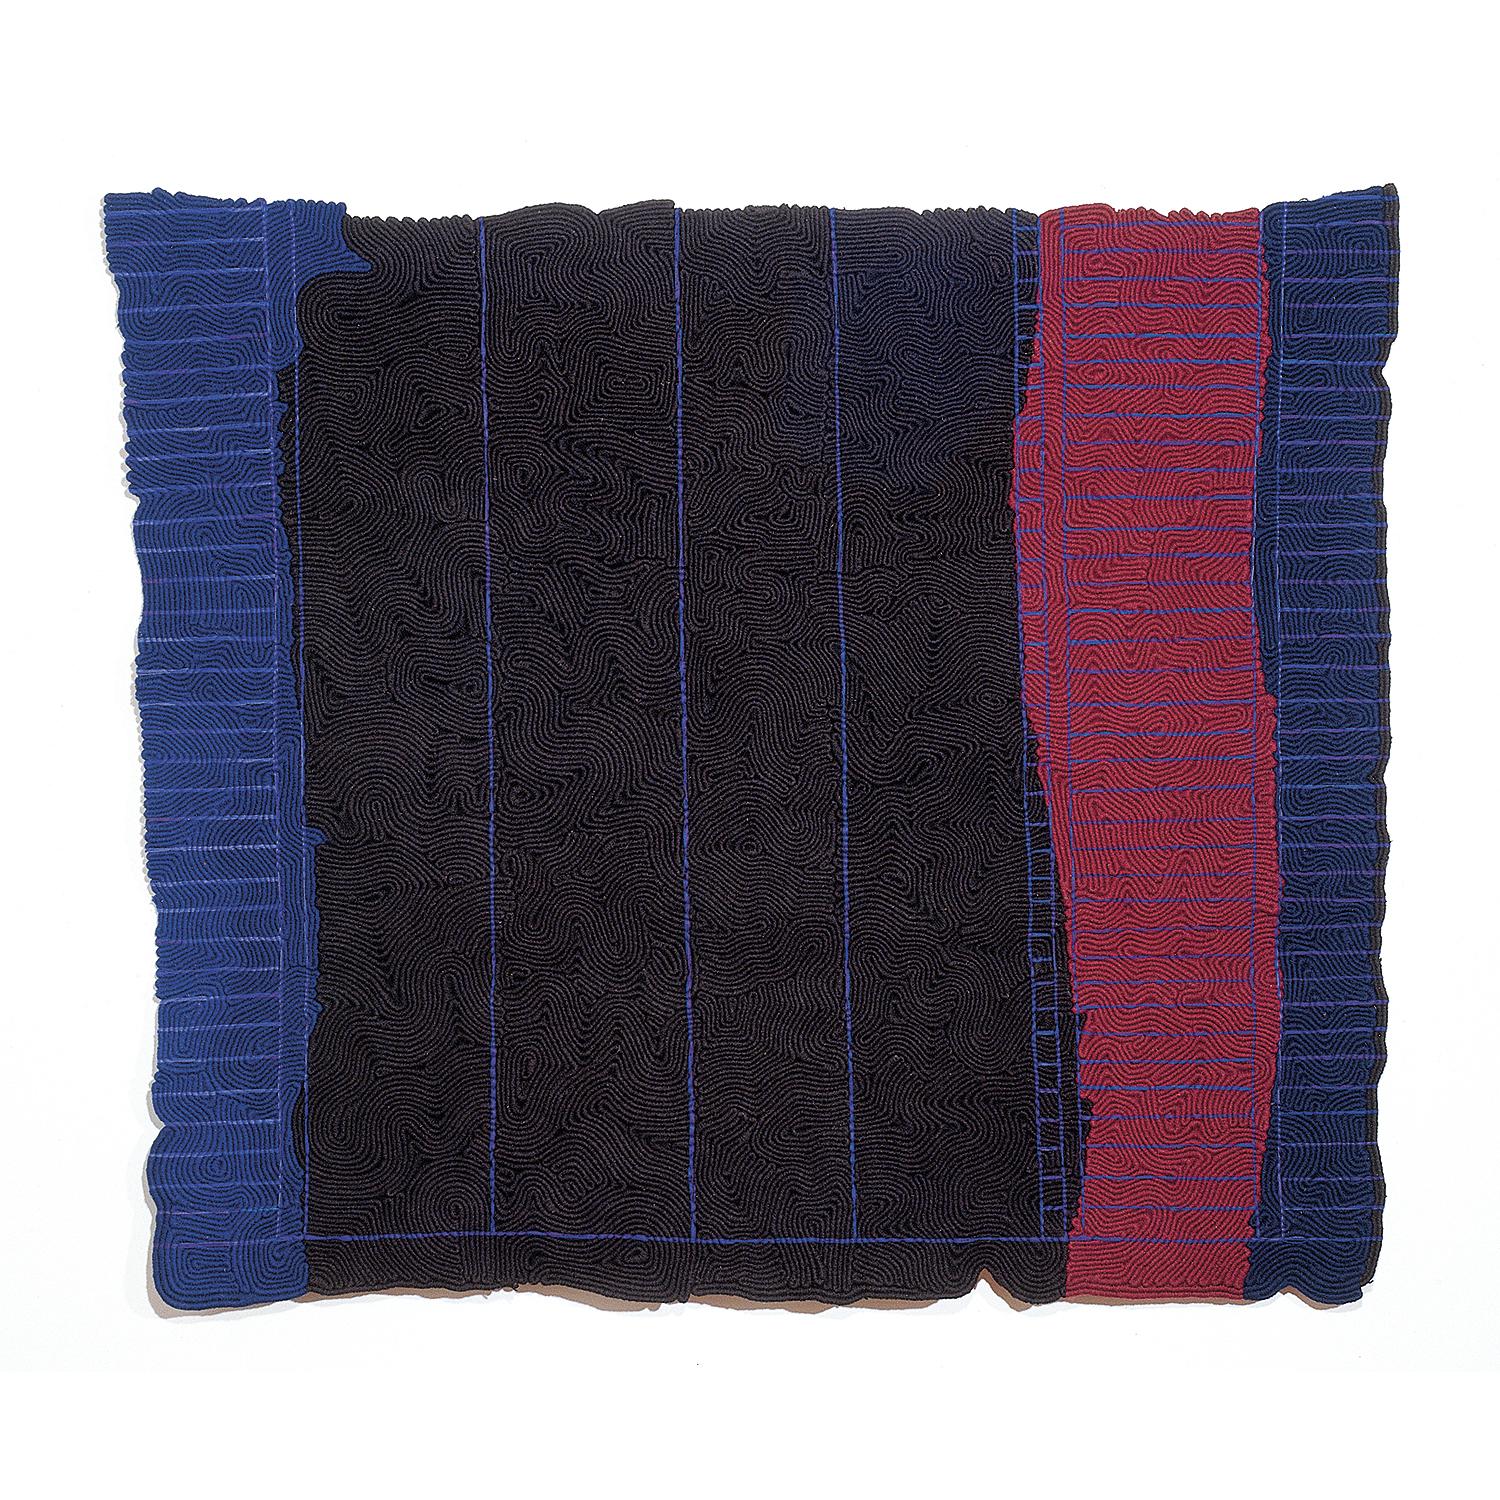 Kari Stiansen Abstract Sculpture - Black No II Blue, Red, Hand-Woven Tapestry, Textile Wall Sculpture